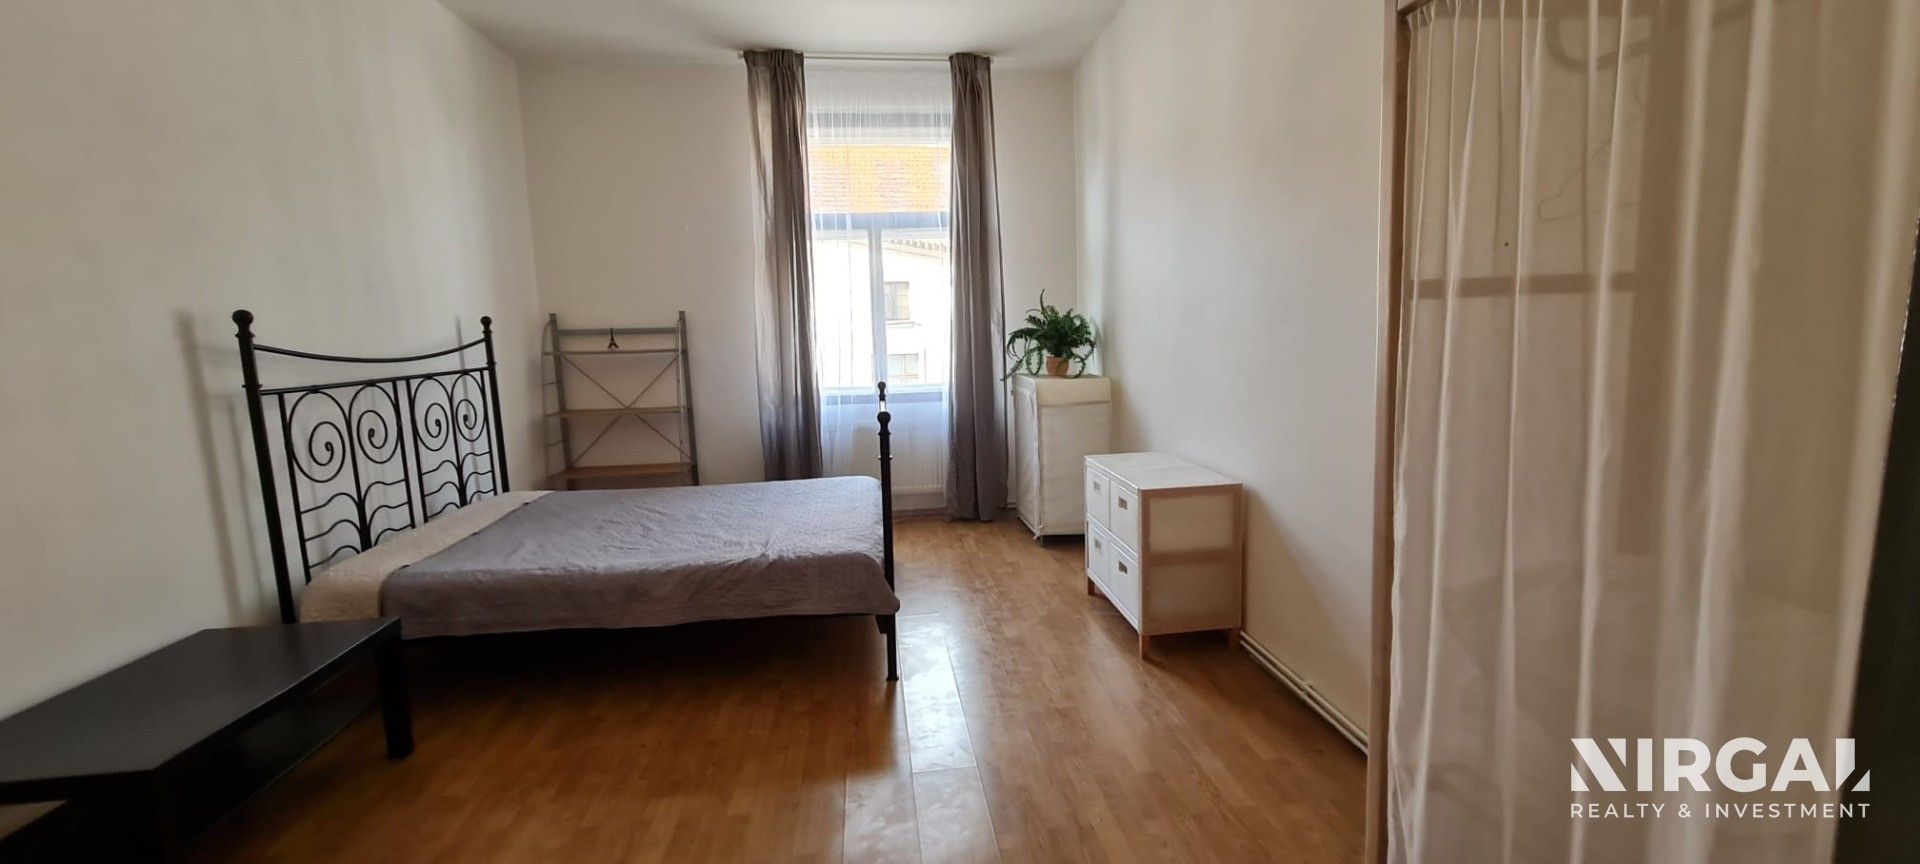 Pronájem byt 1+1 - Vlastislavova, Praha, 35 m²